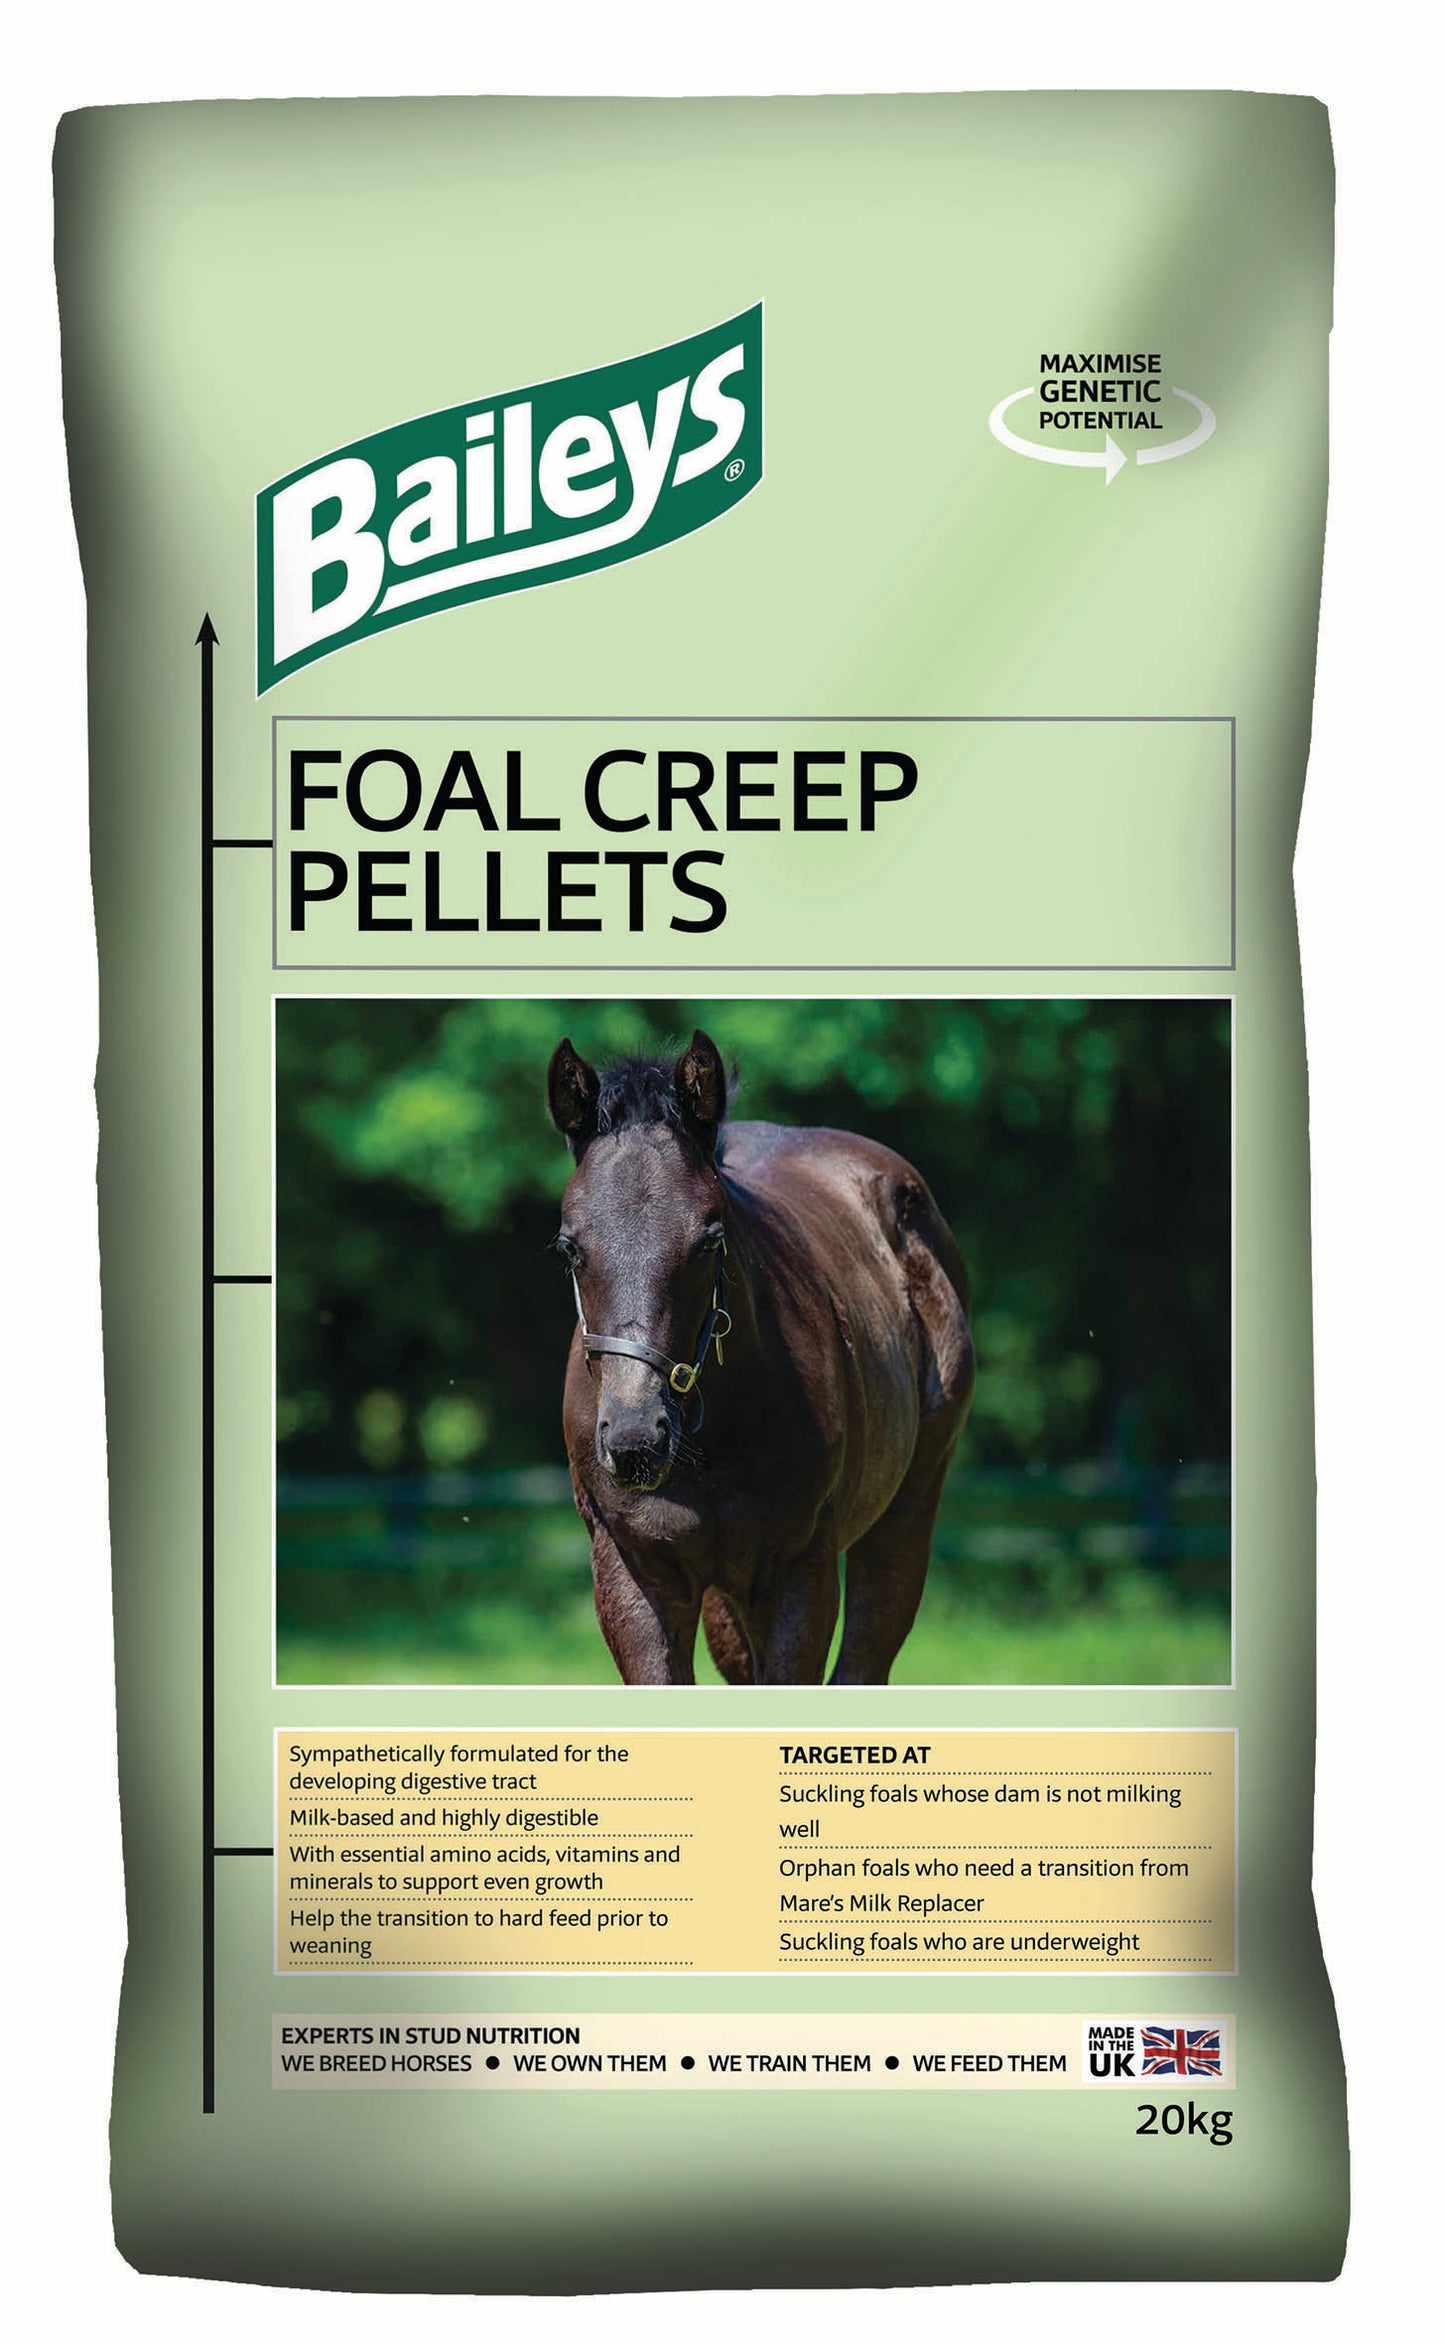 Baileys Foal Creep Pellets